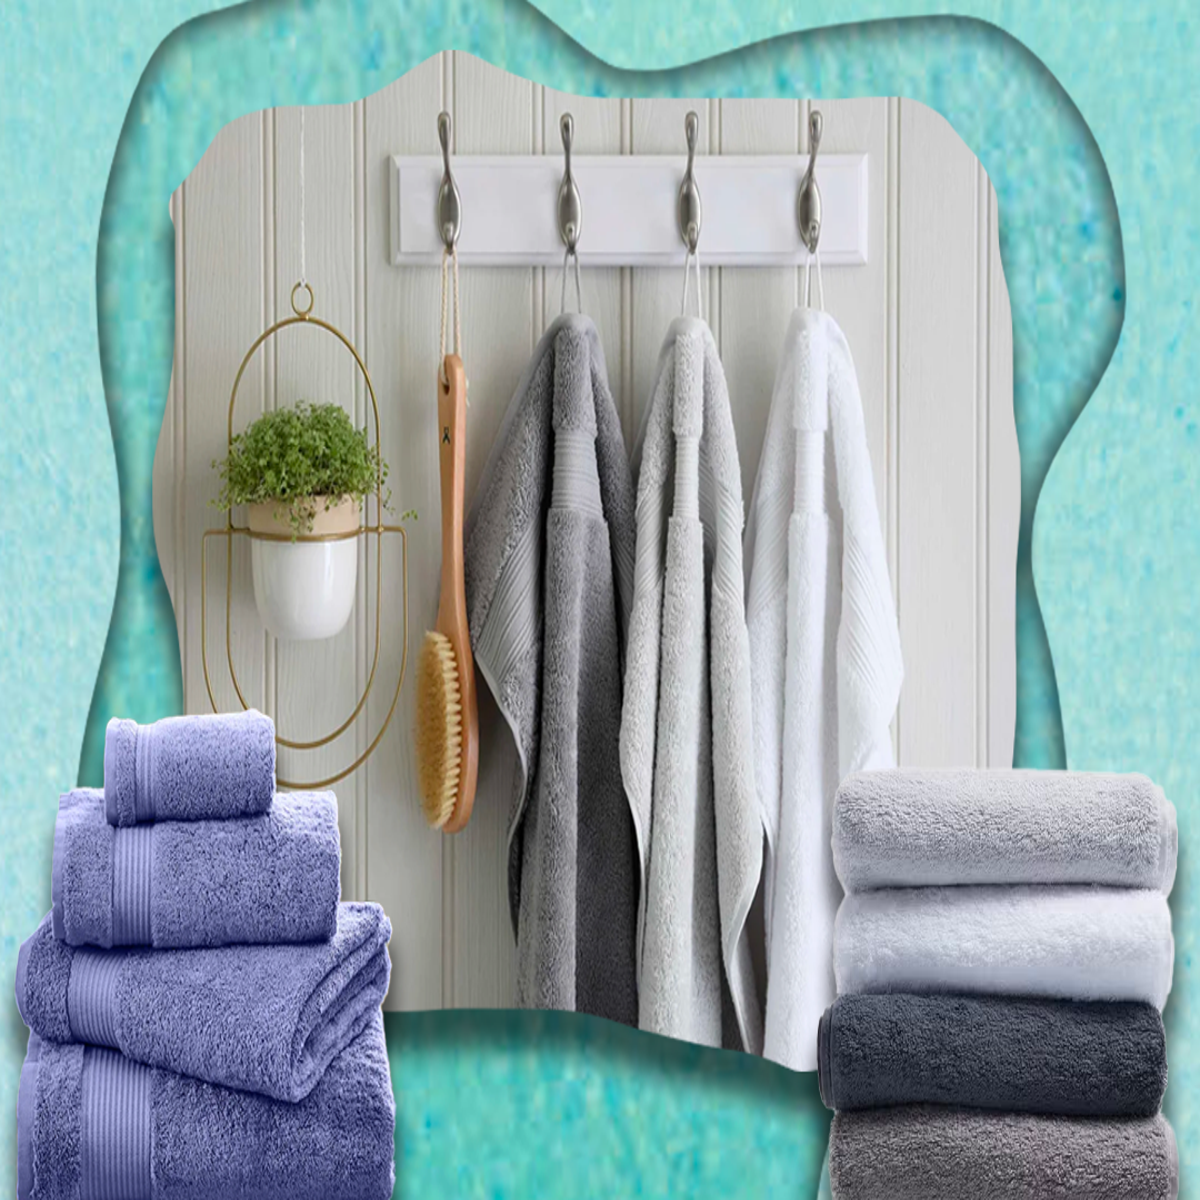 Ultra Absorbent Sponge Towel for Pets - Bath Towels - Gray